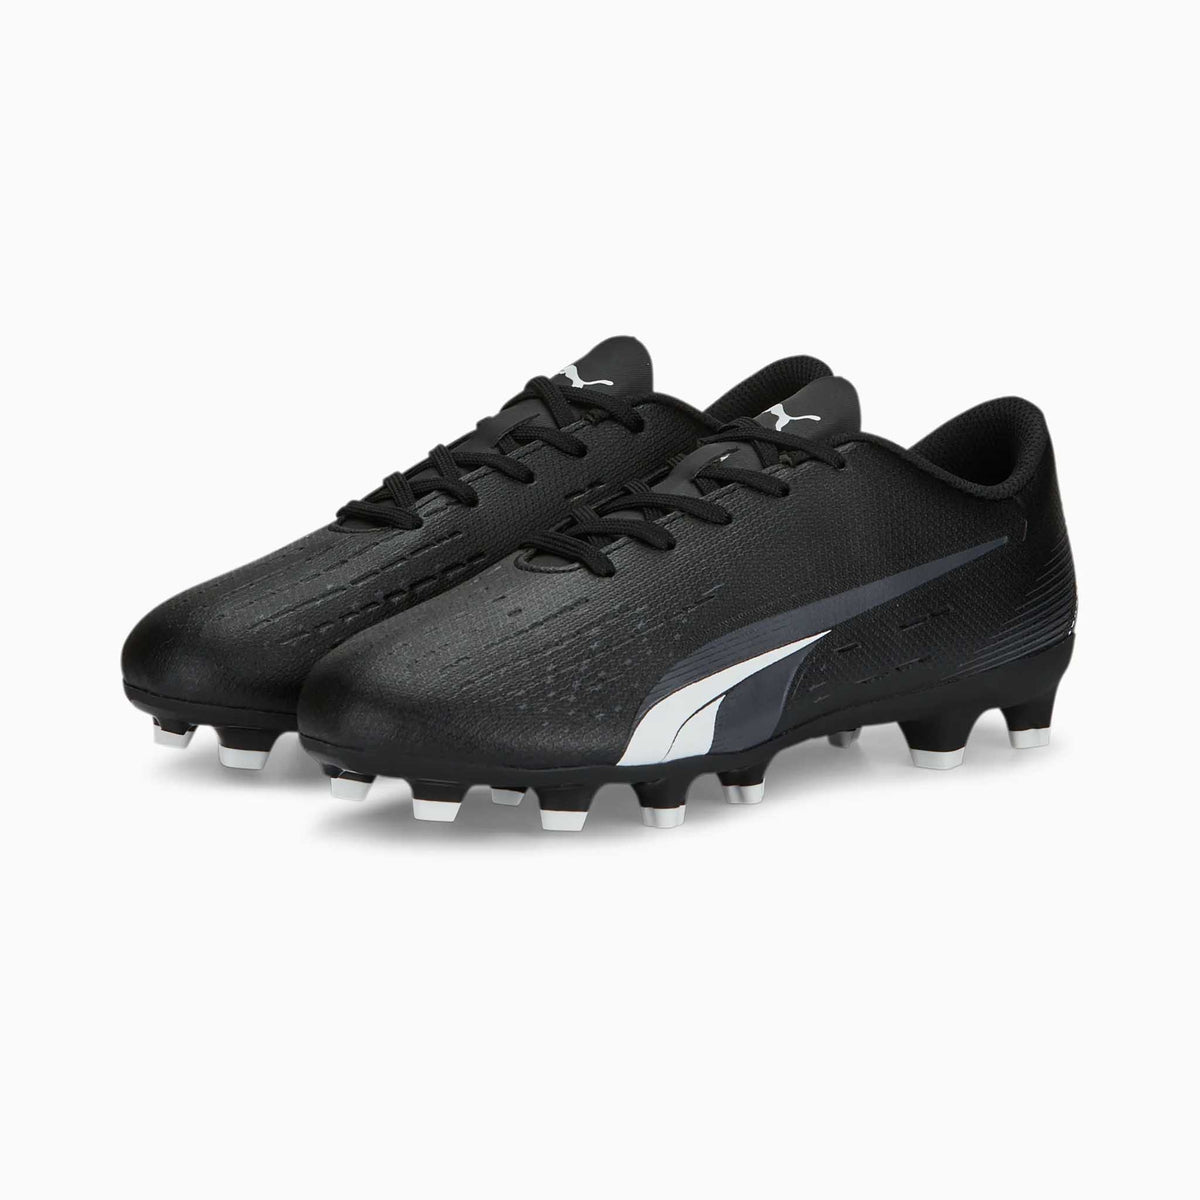 Puma Ultra Play FG/AG souliers soccer crampons enfant paire- noir